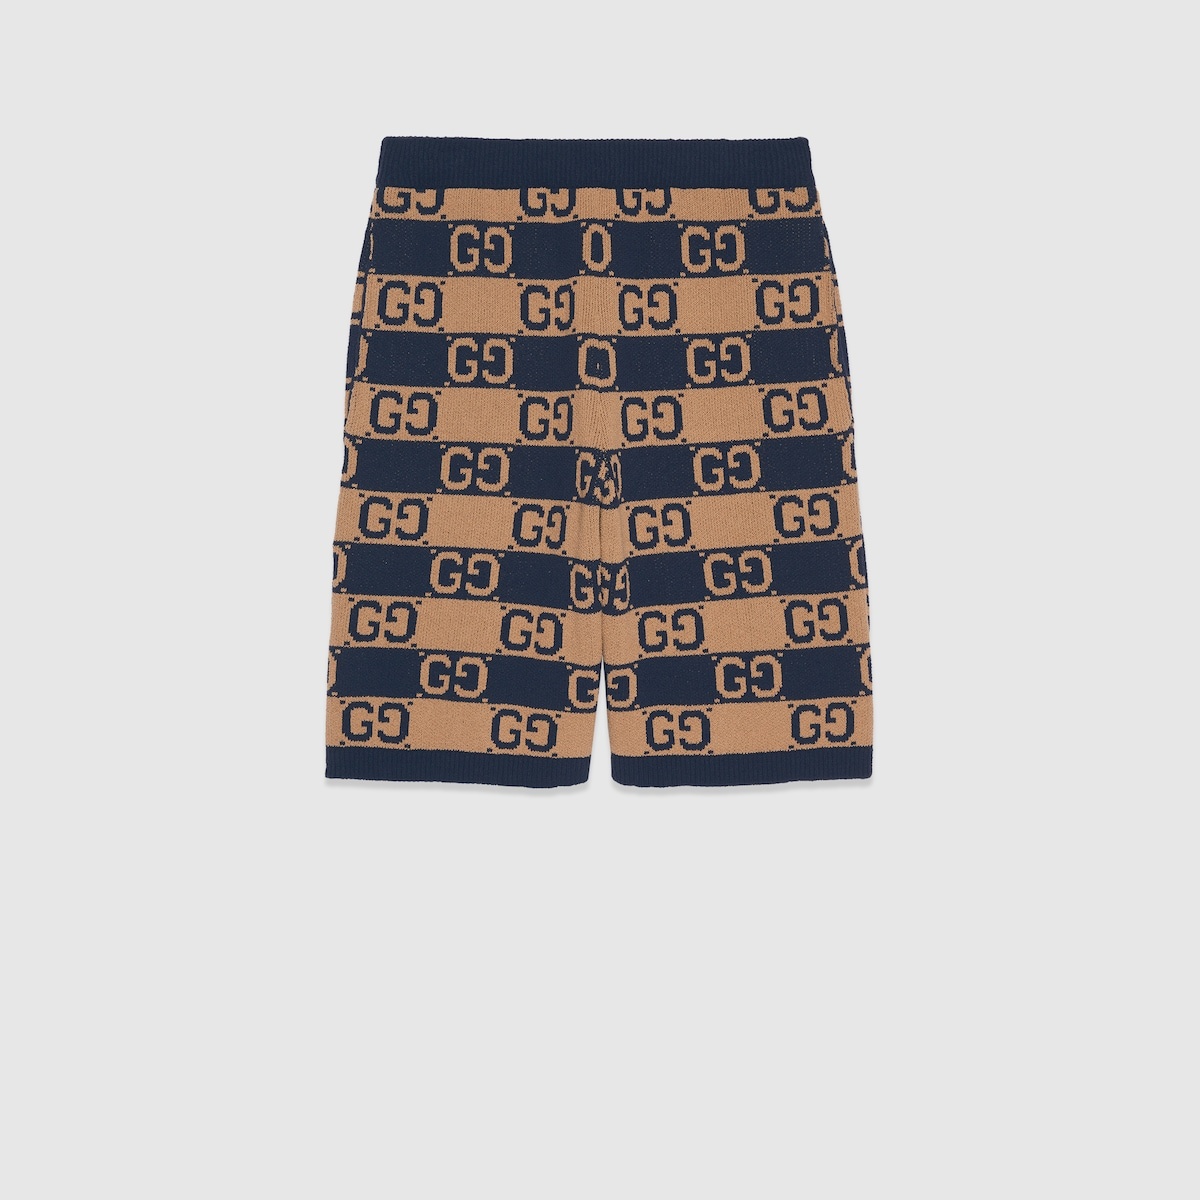 GG cotton jacquard shorts - 1